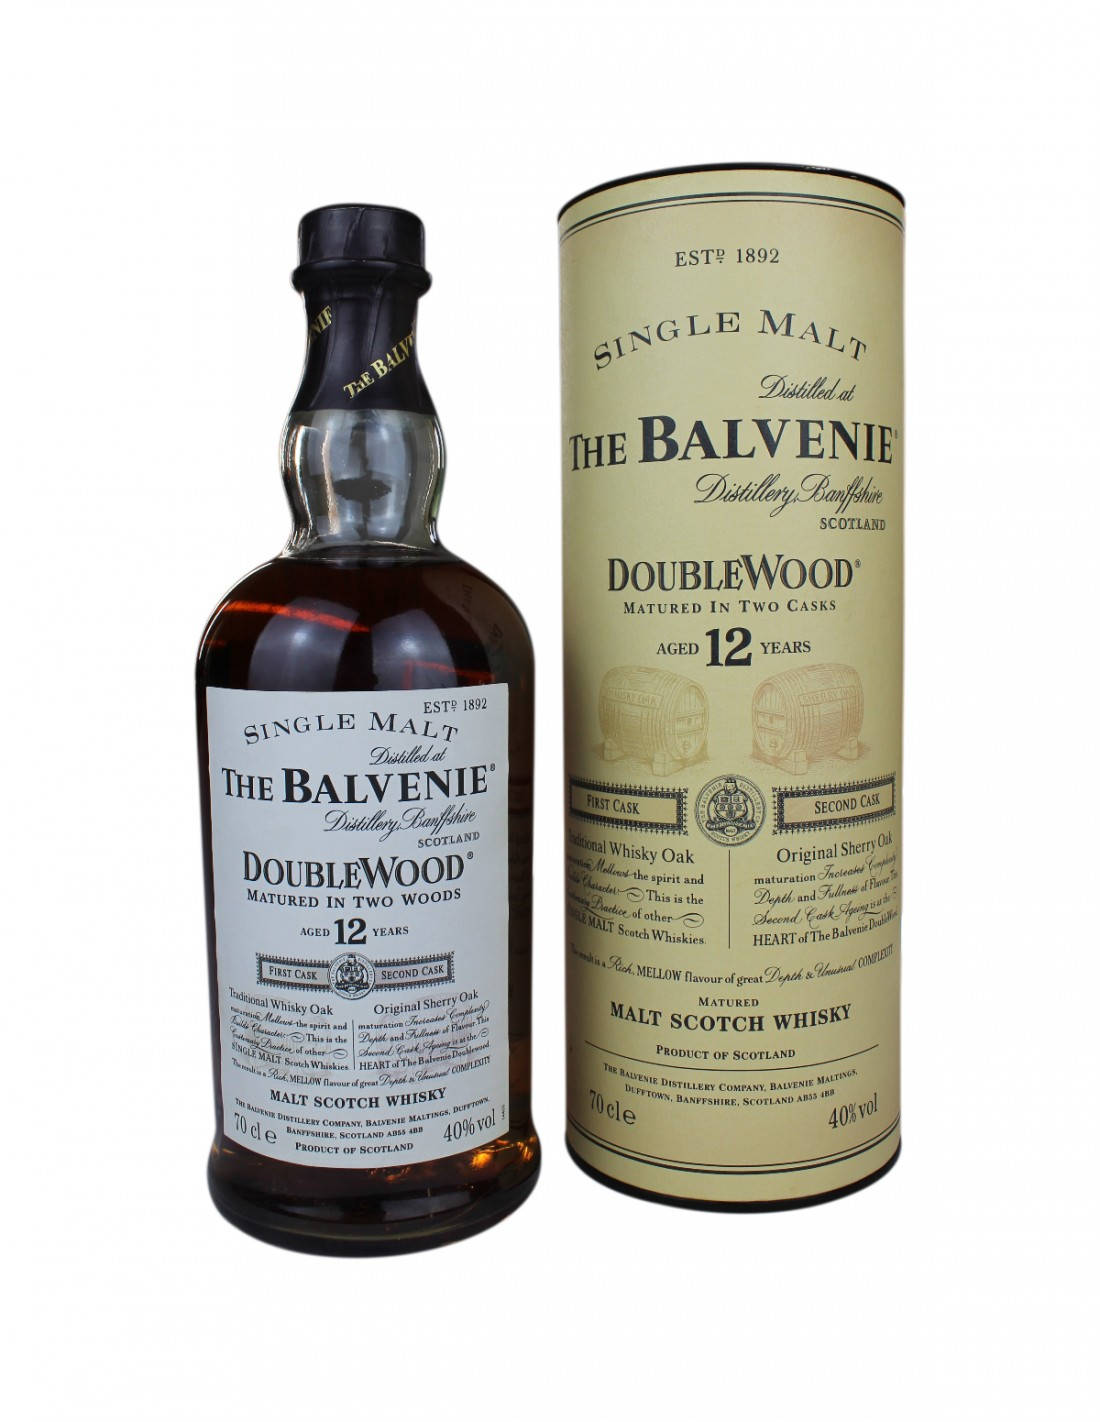 Den Balvenie Malt Scotch Whisky wallpaper ærer gæren, der hjælper med at producere whisky. Wallpaper